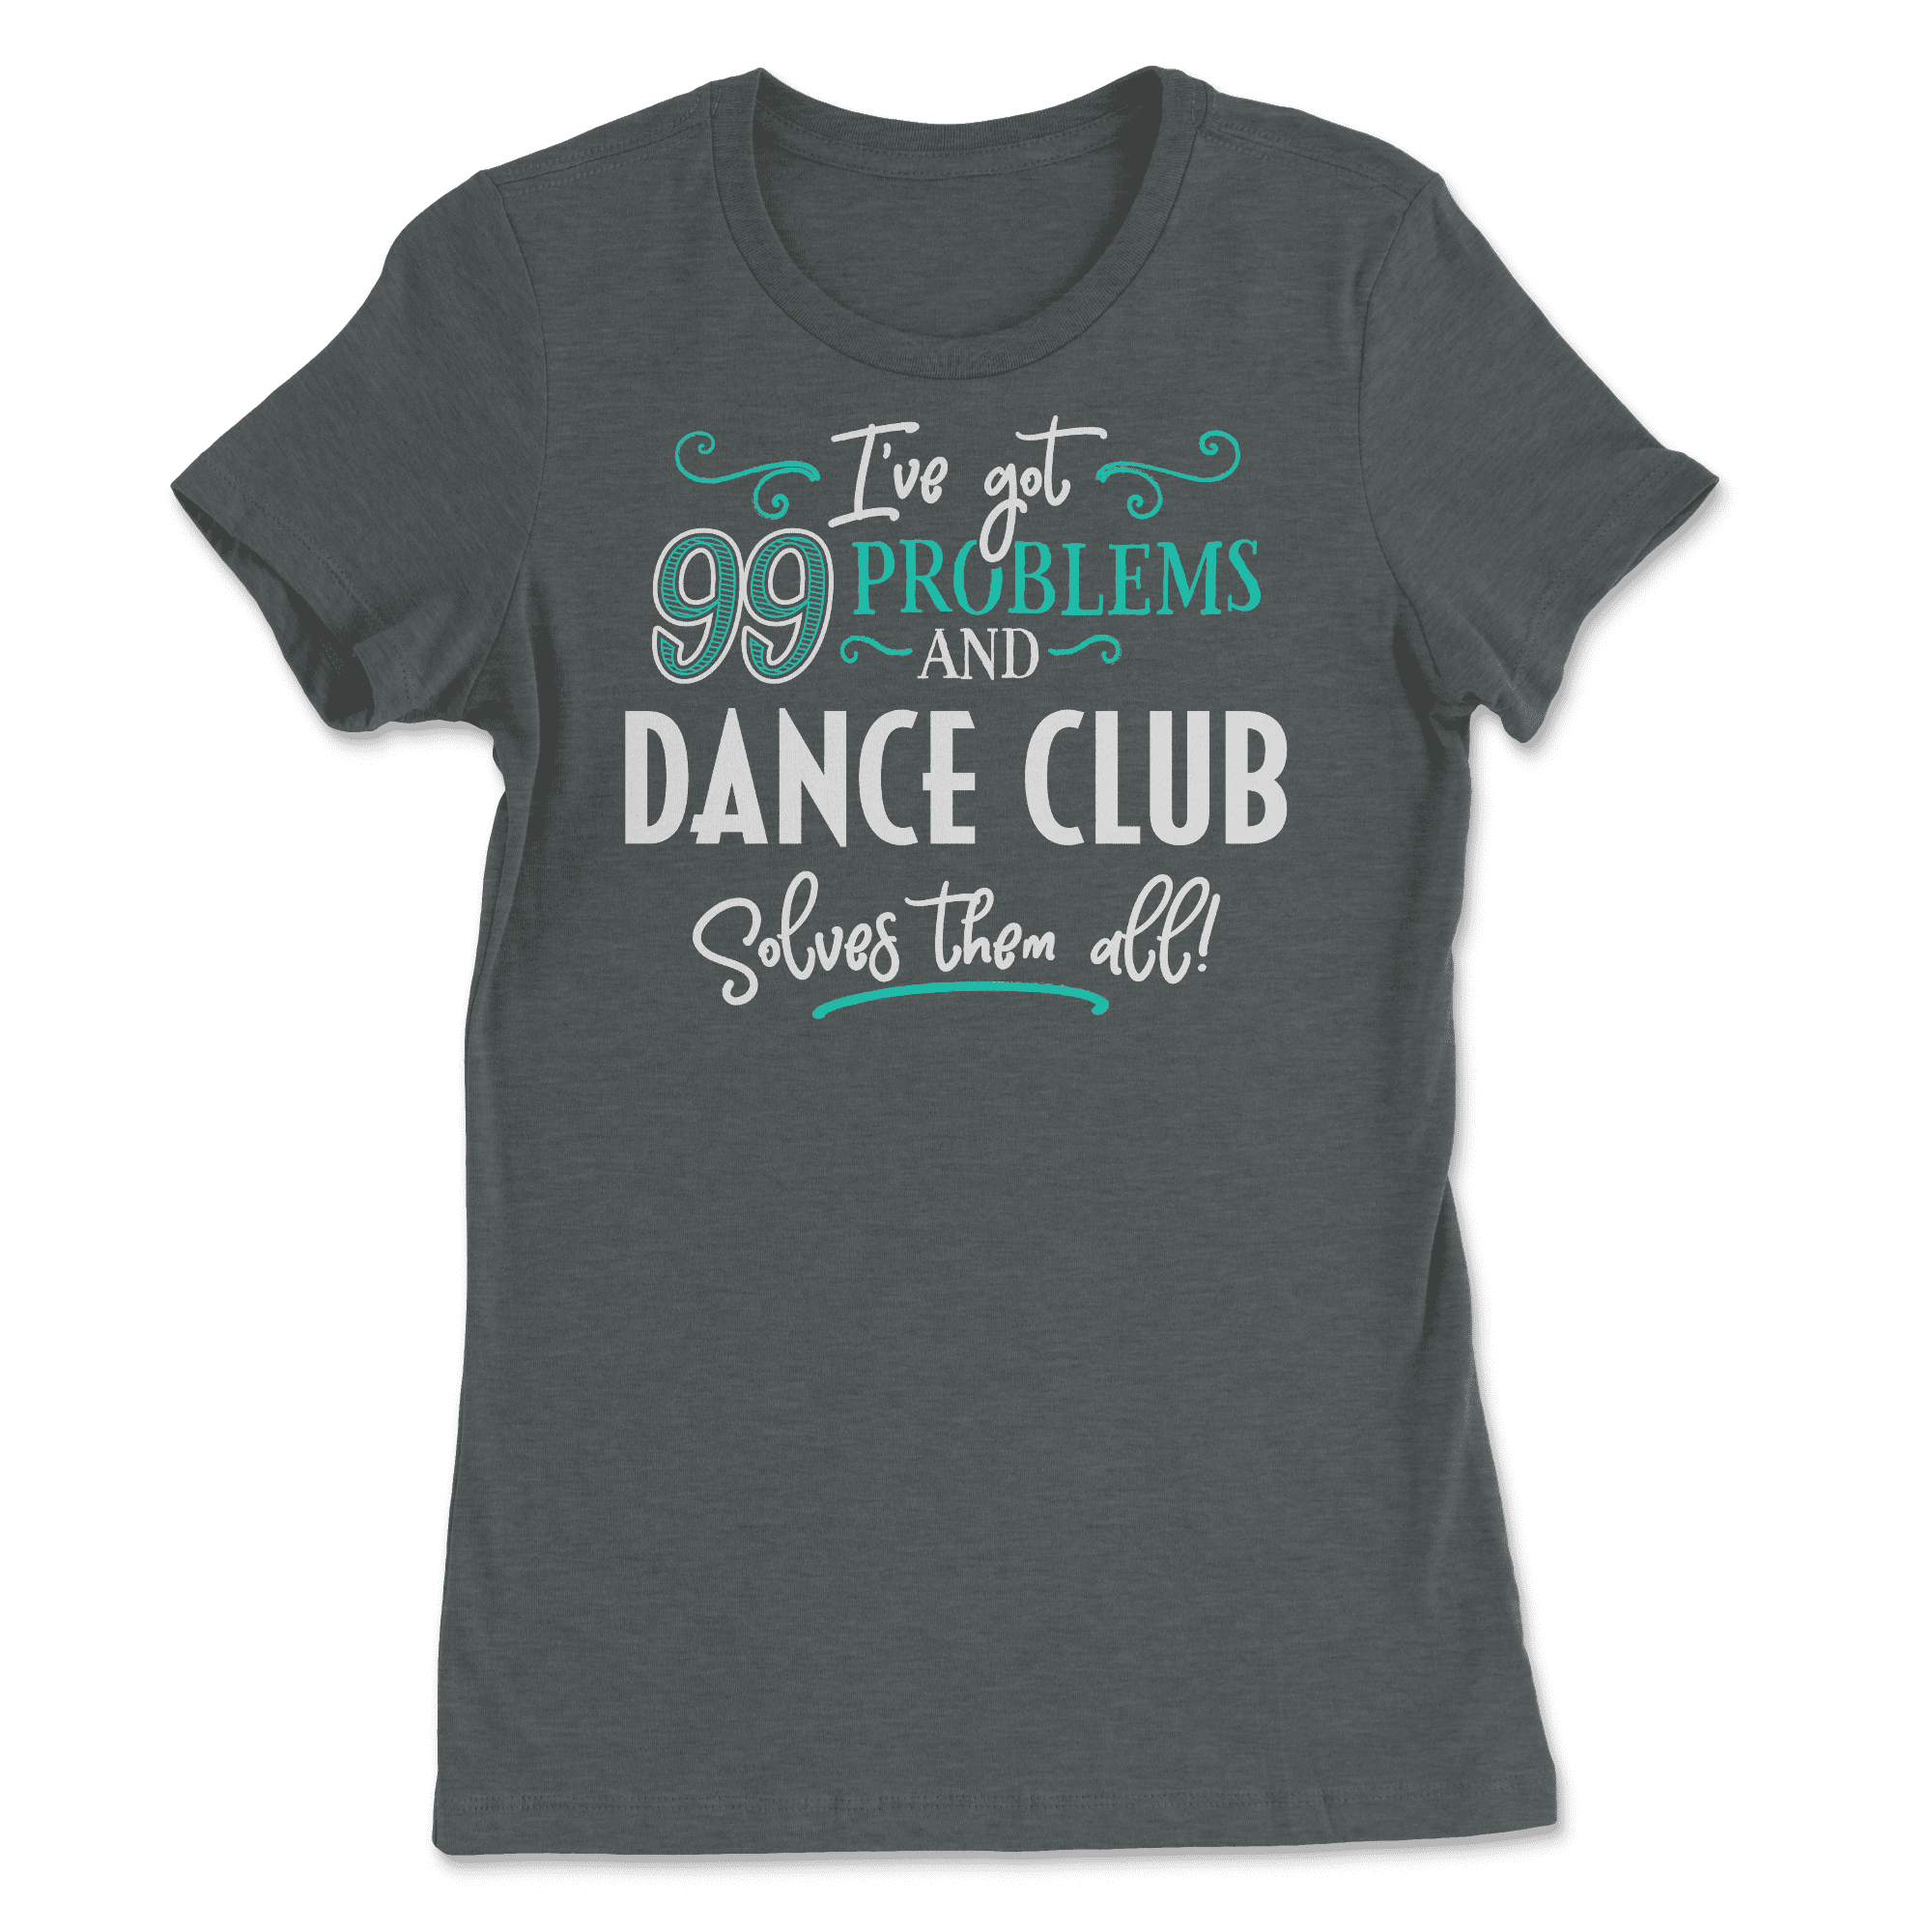 Funny Dance Club Shirt - I've Got 99 Problems! 